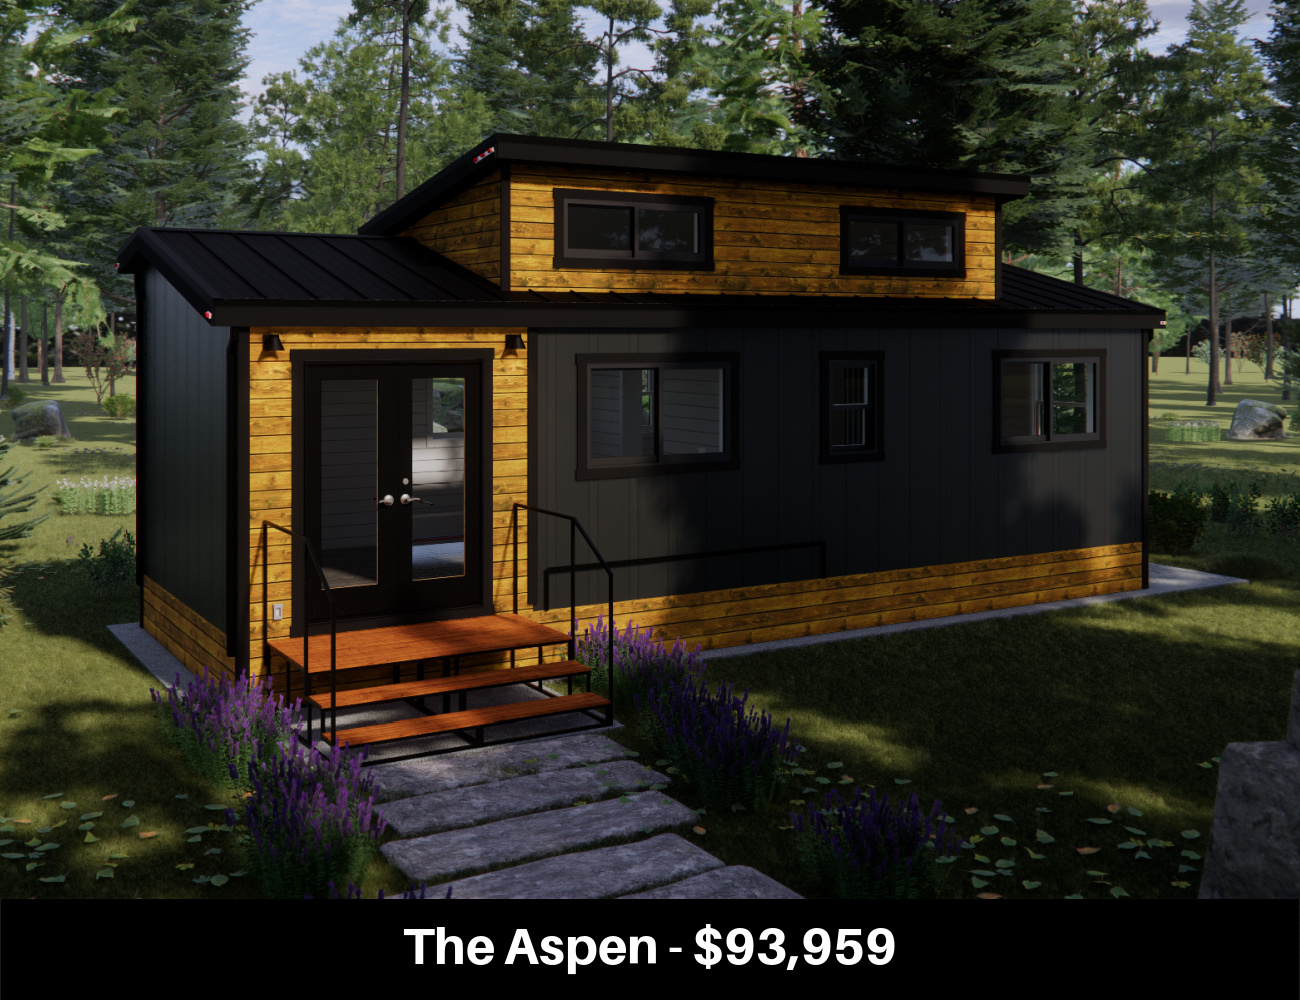 The Aspen - $93,959